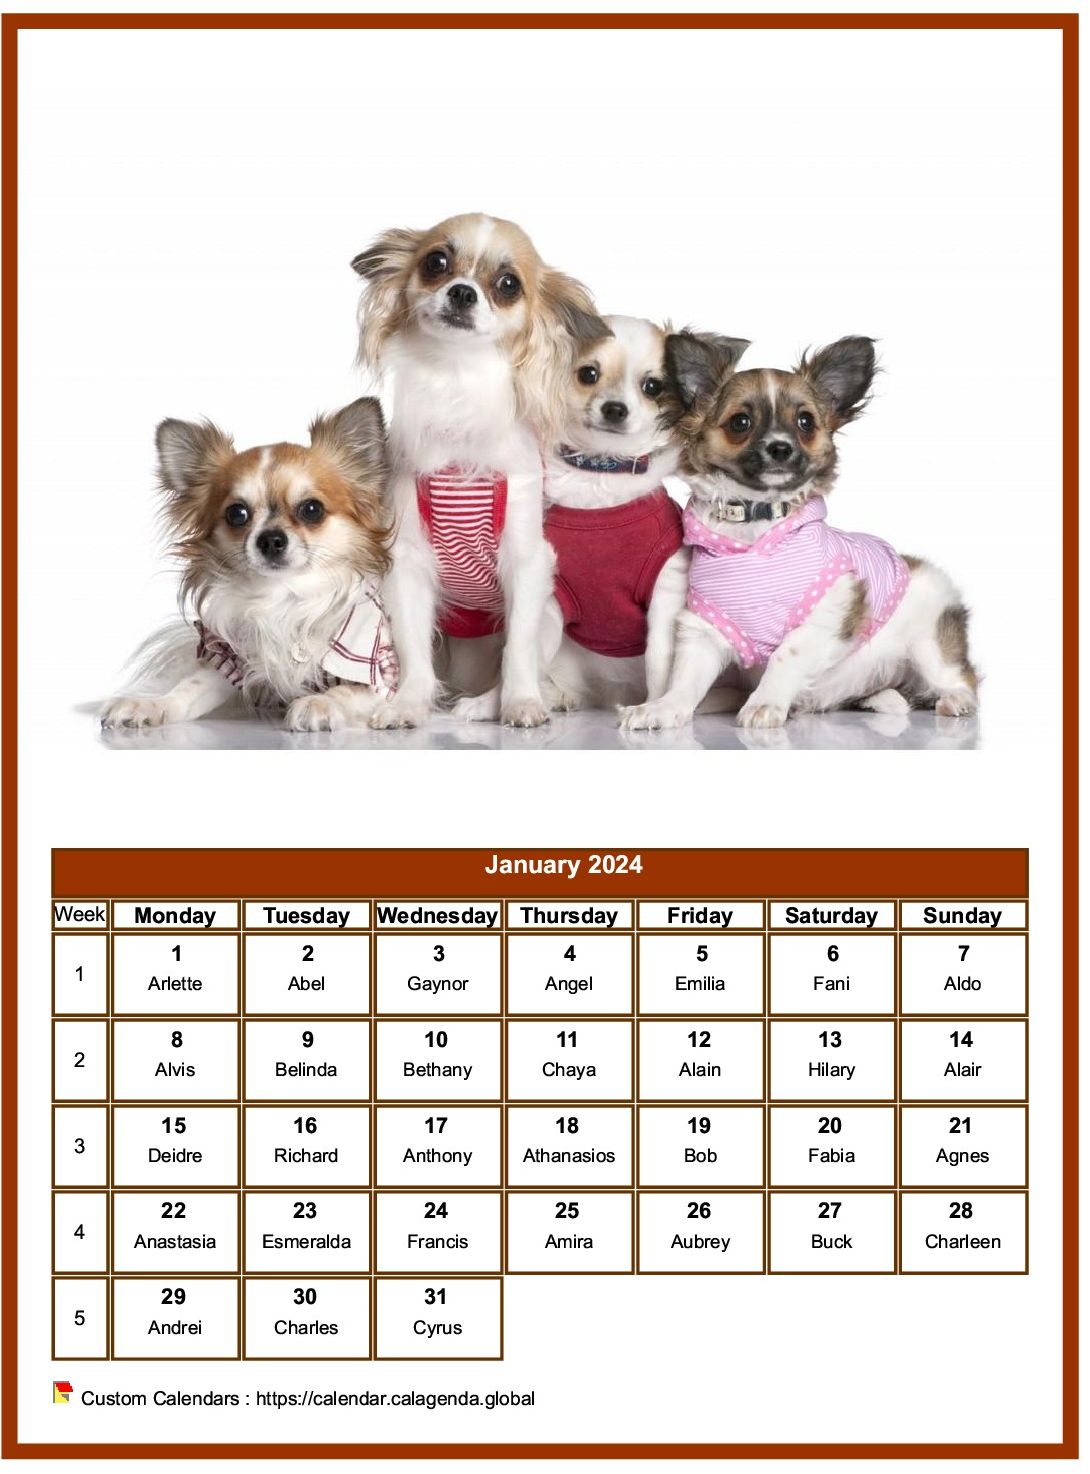 Calendar January 2024 dogs